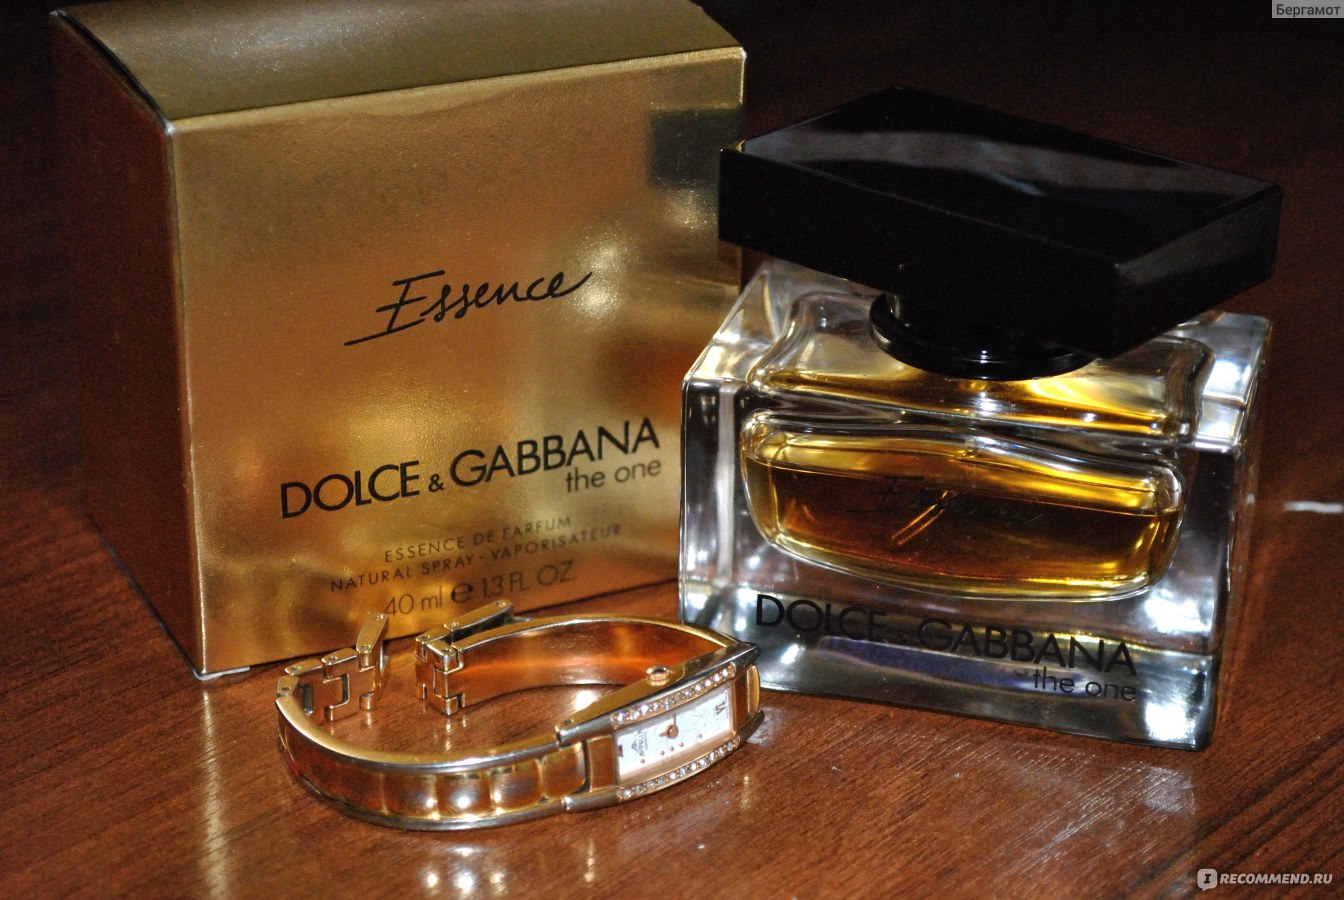 Дольче габбана кью отзывы. Дольче Габбана Ван Голд 100. Dolce Gabbana the one Essence. Dolce Gabbana parfumuri. Упаковка Дольче Габбана.